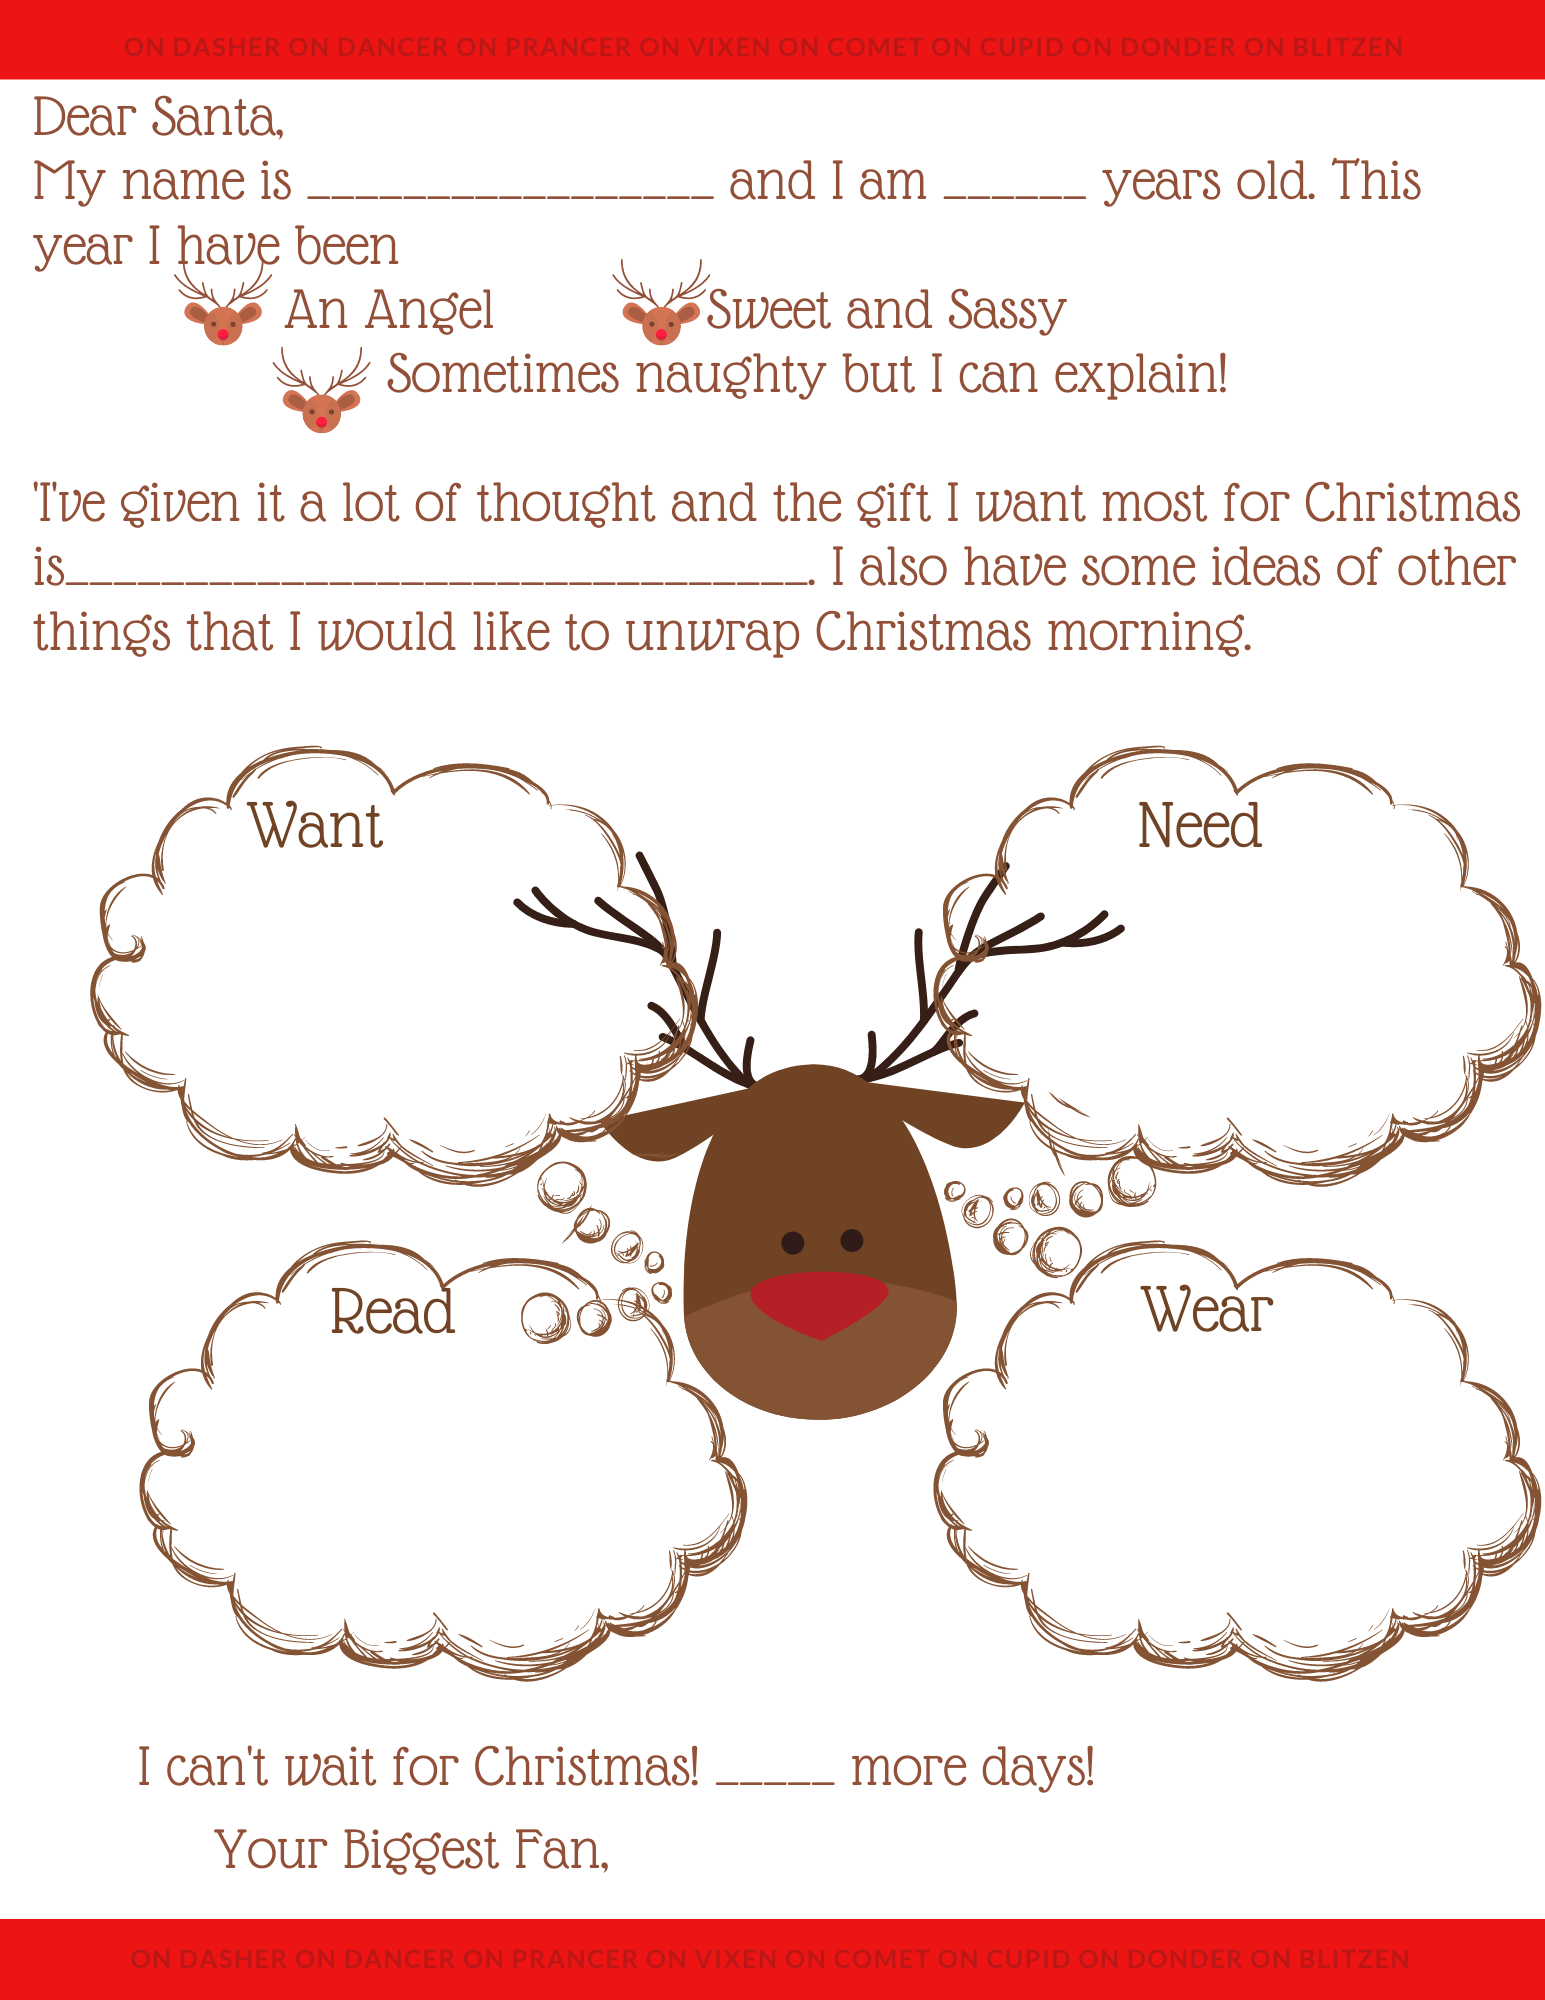 this reindeer santa letter is cute and functional